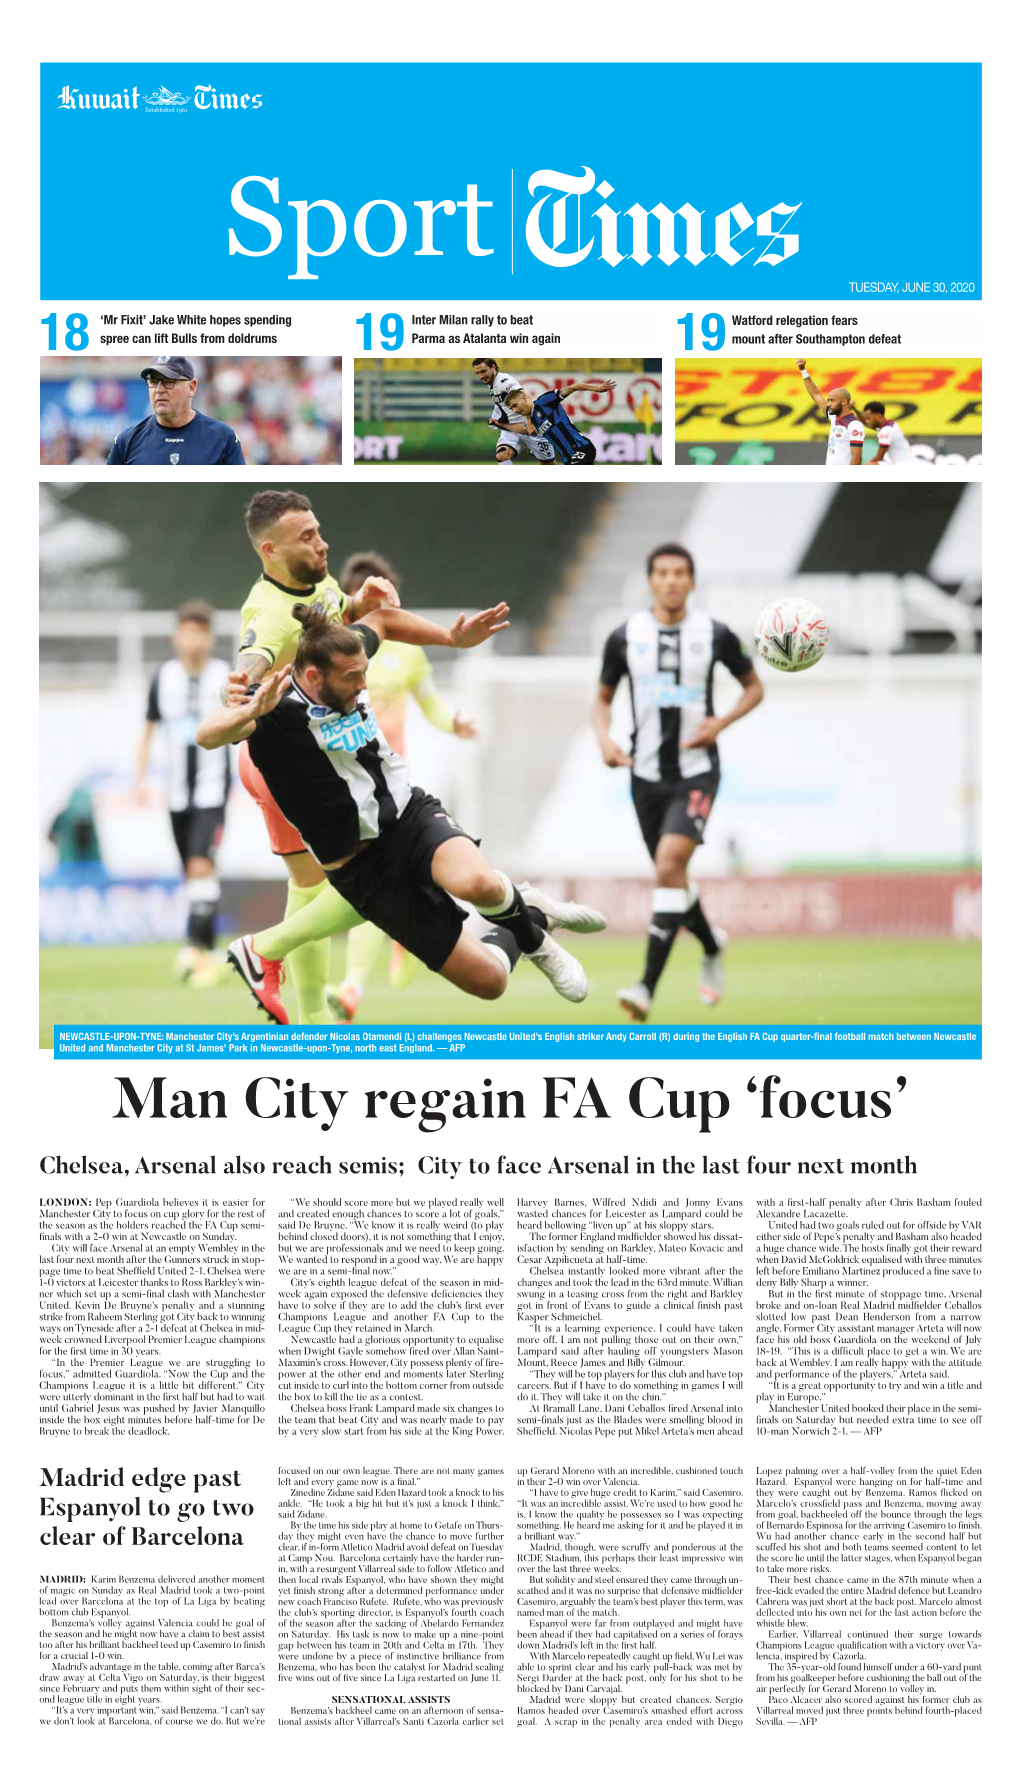 Man City Regain FA Cup ‘Focus’